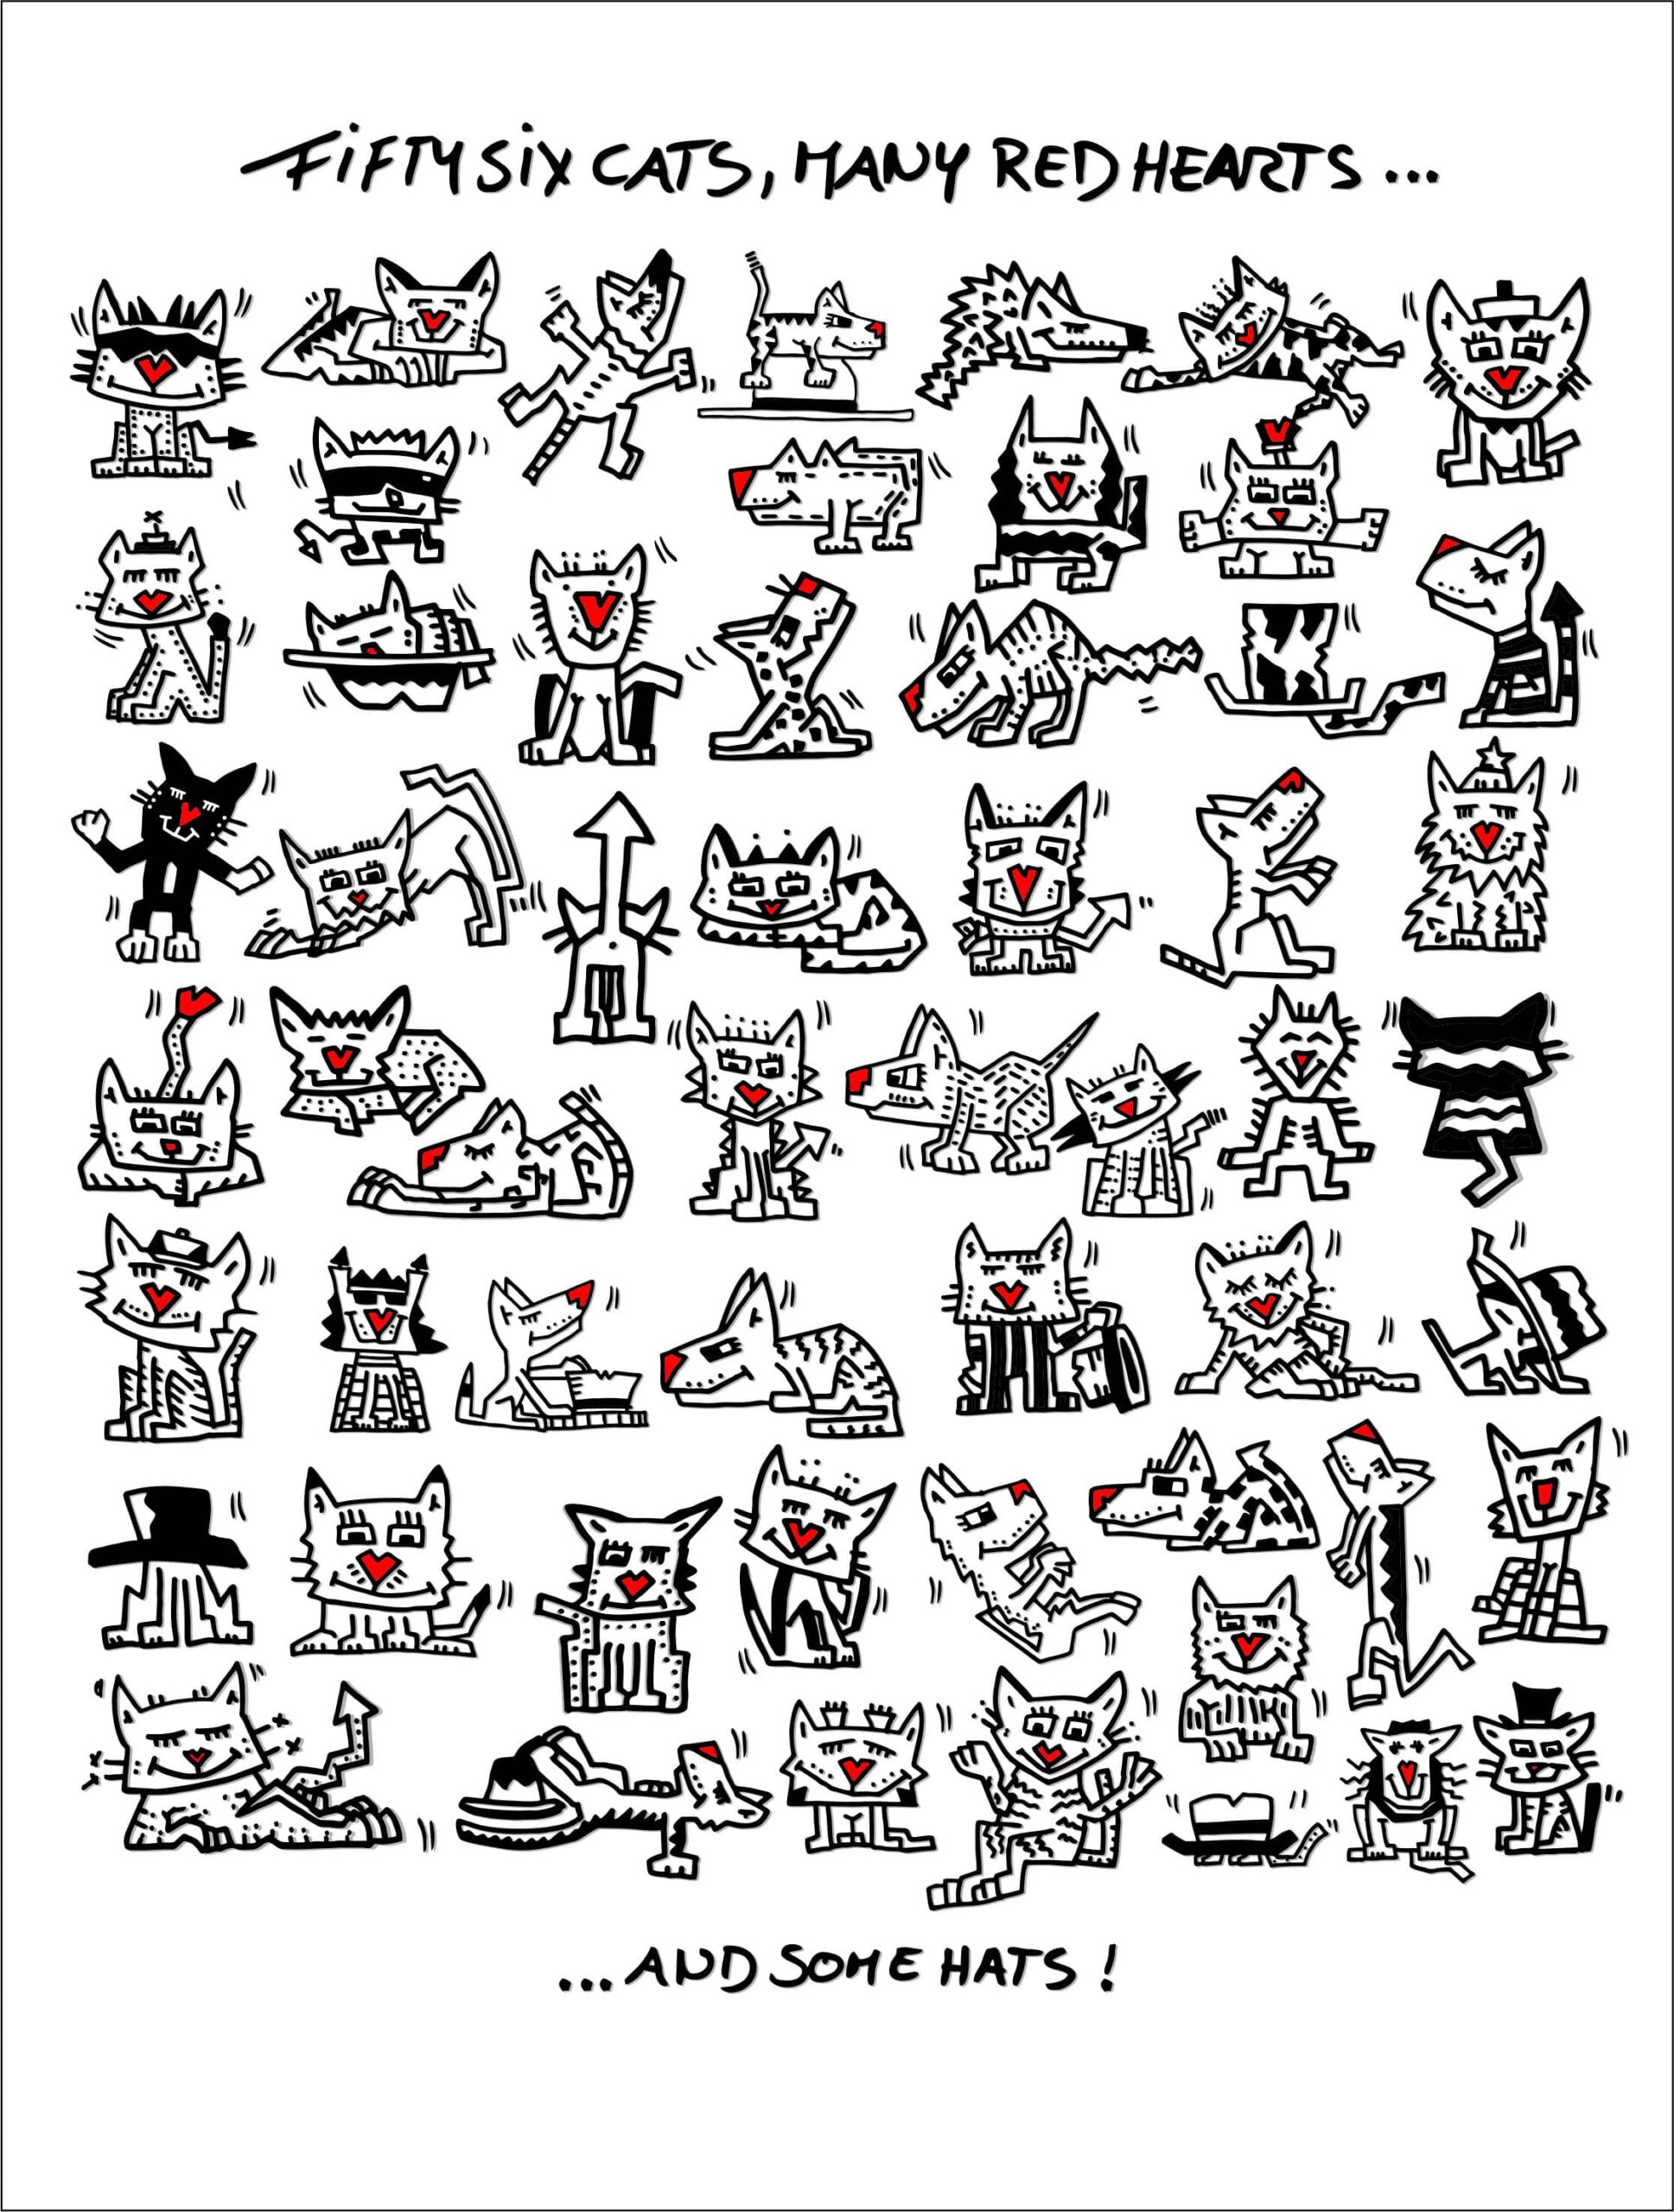 Fifty six cats, many red hearts